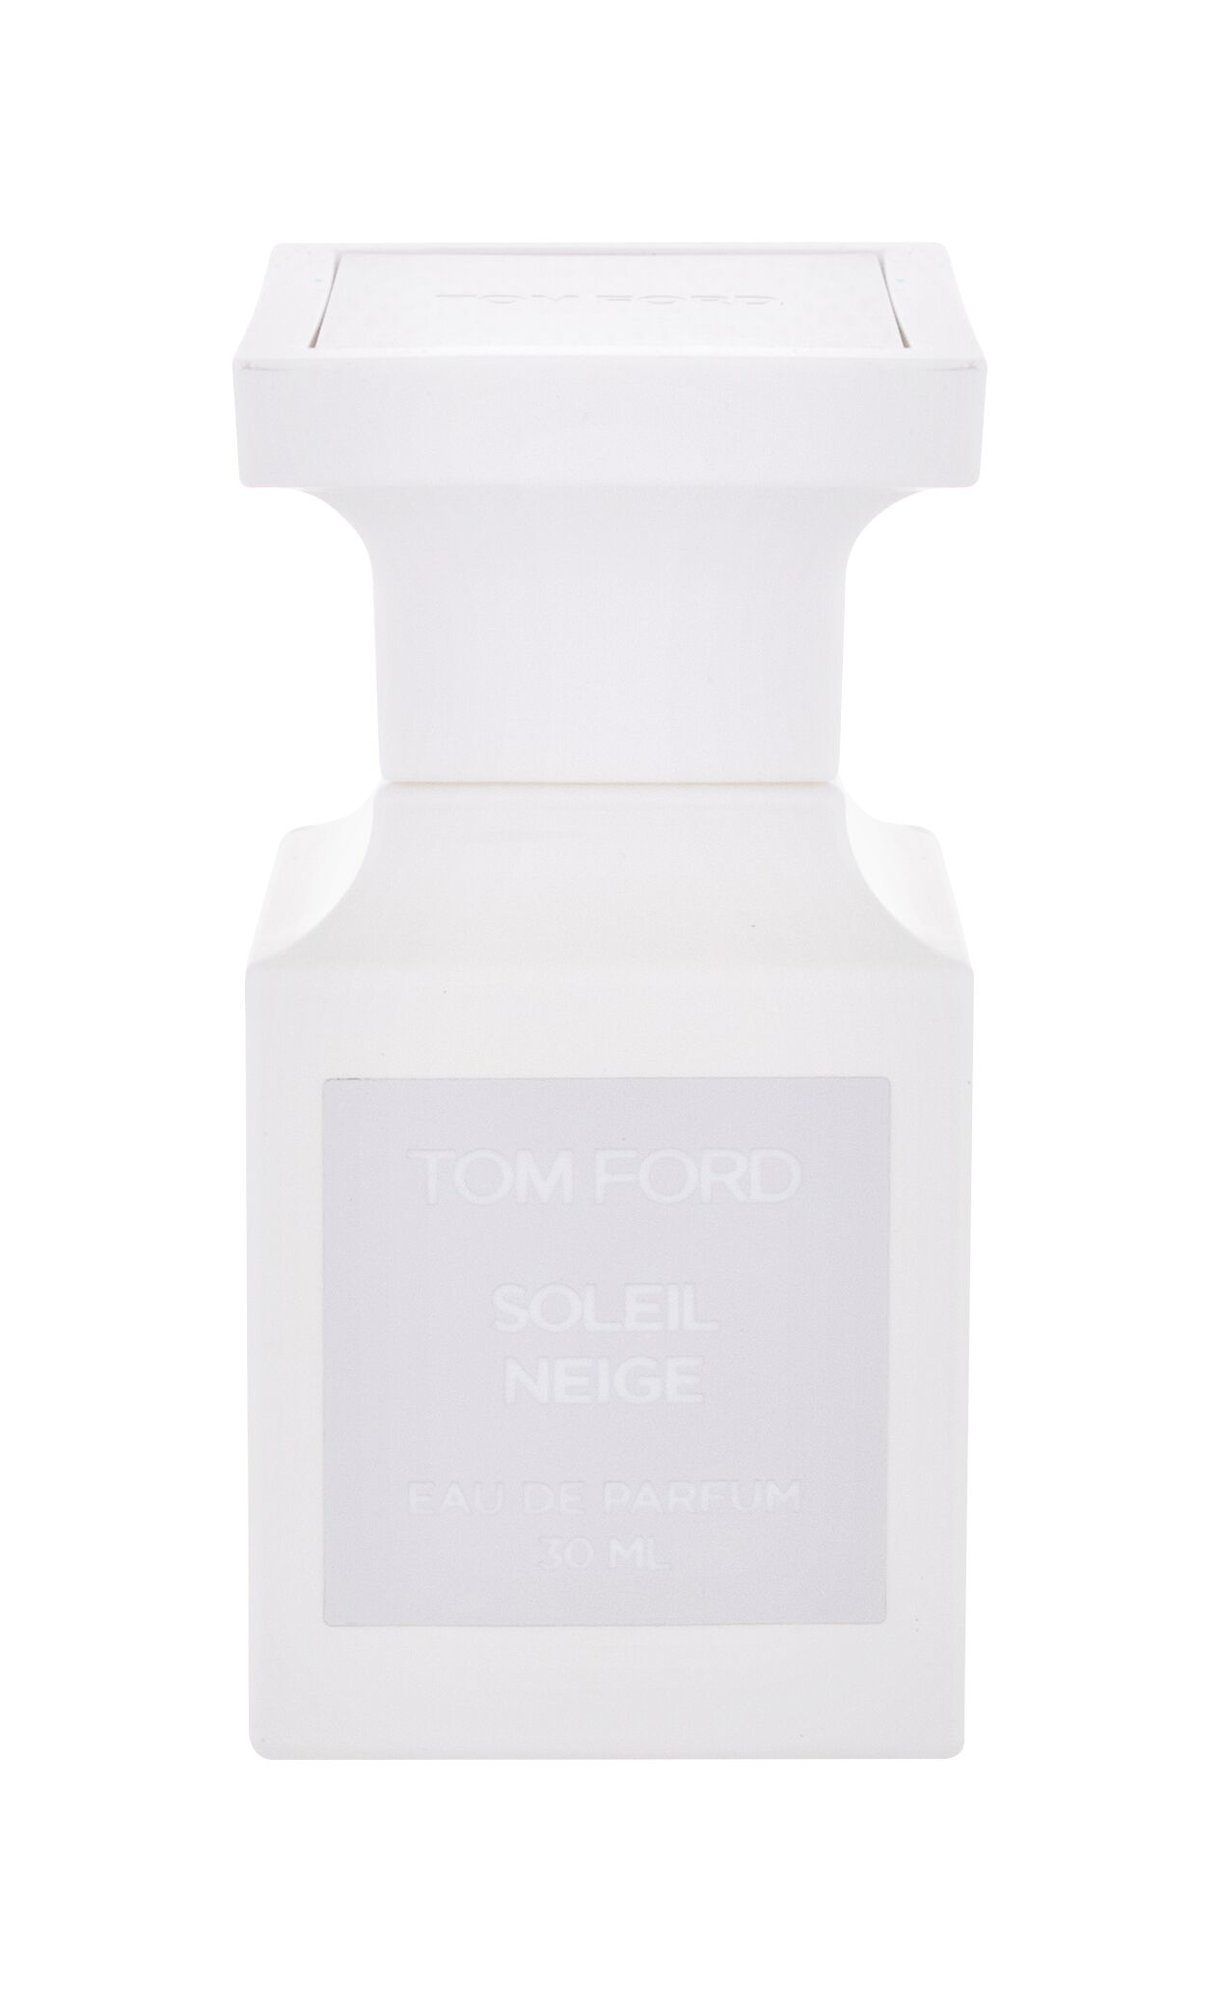 TOM FORD Soleil Neige, Parfumovaná voda 50ml - Tester